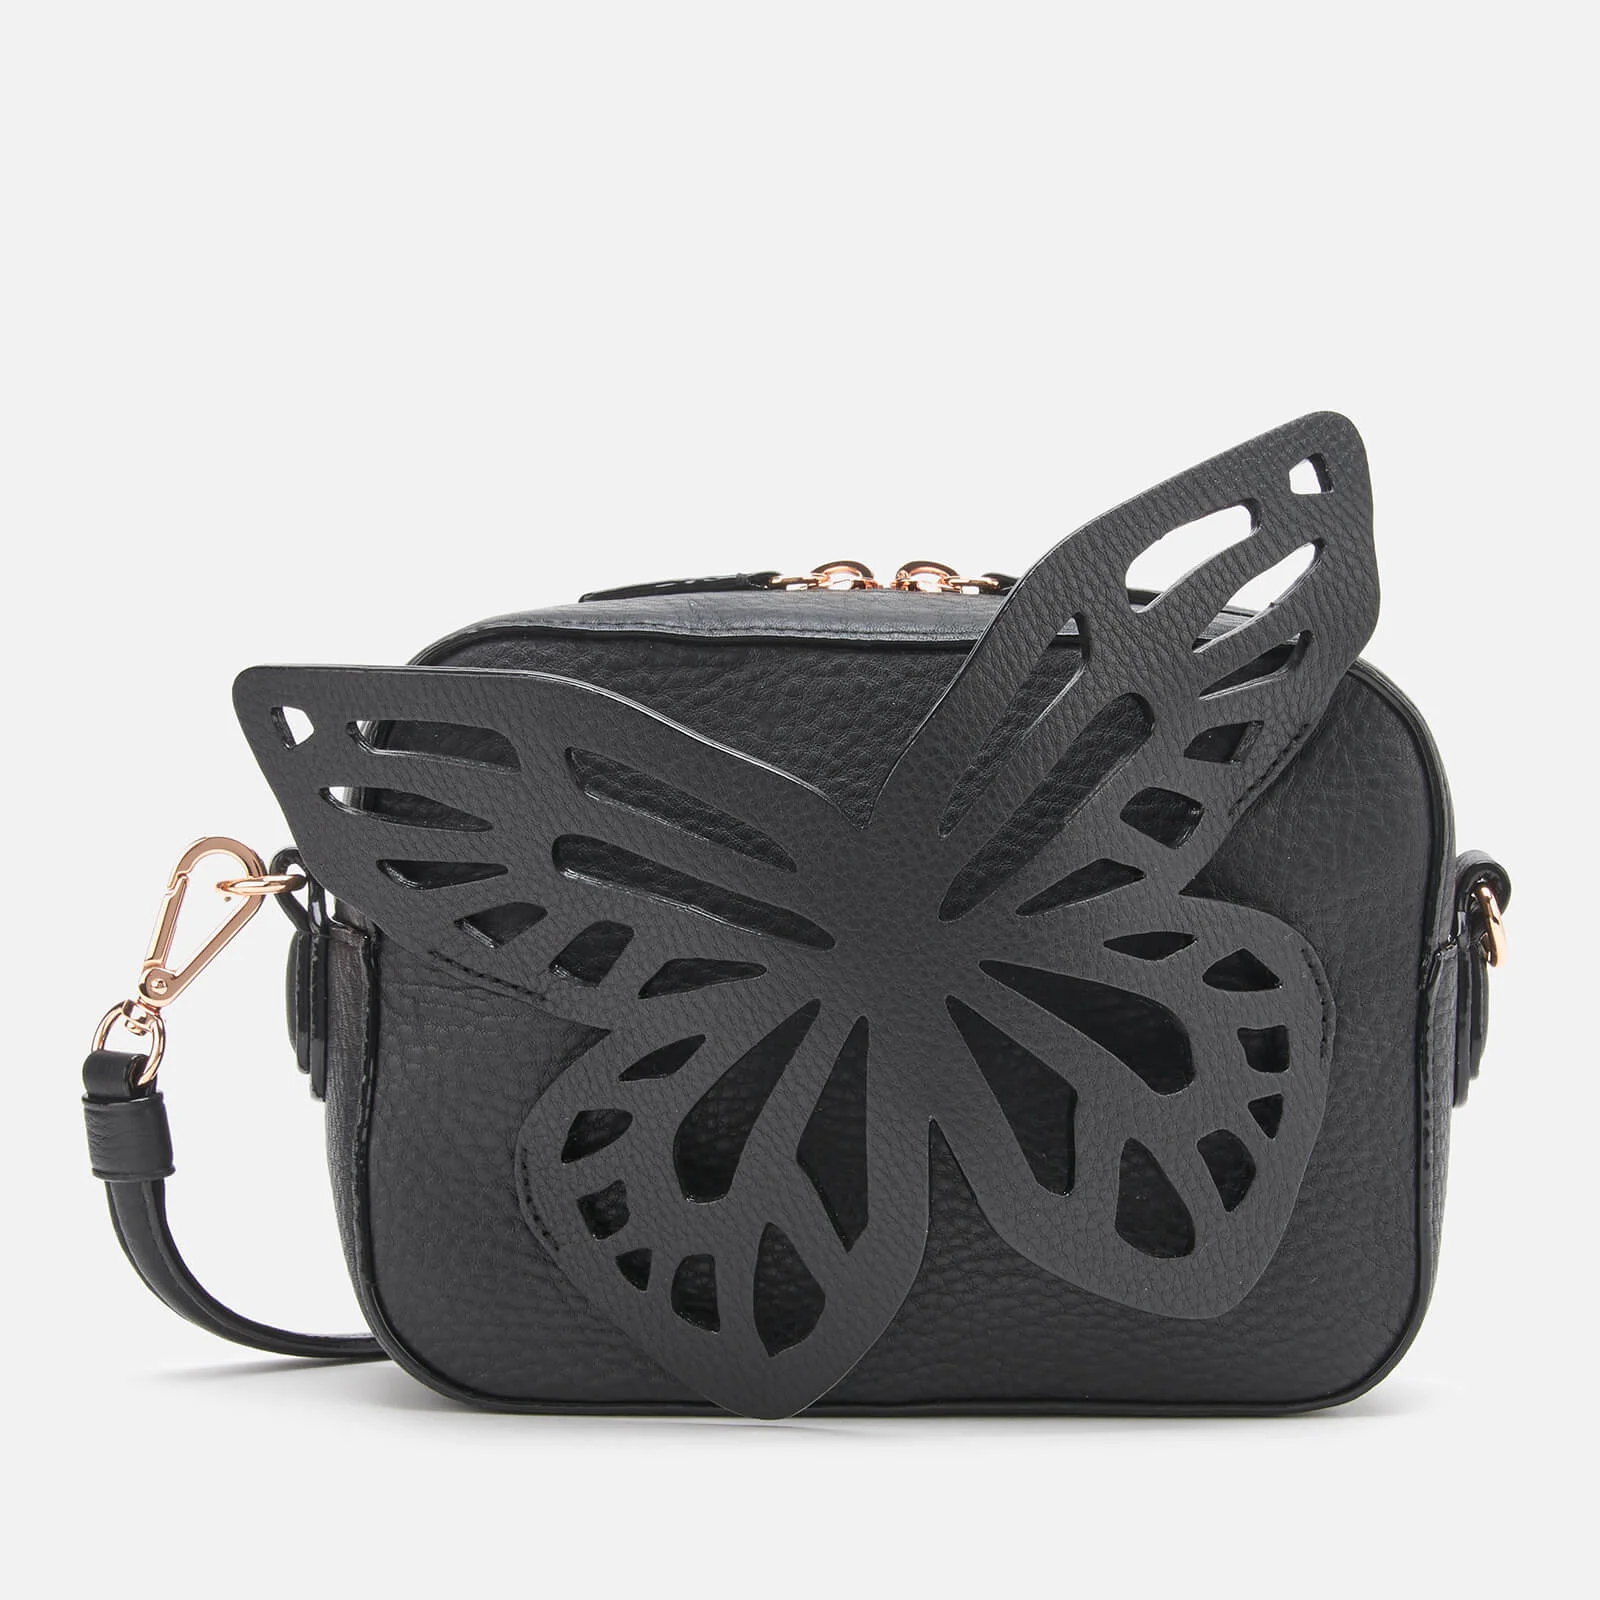 Sophia Webster Women's Flossy Butterfly Camera Bag - Black Image 1